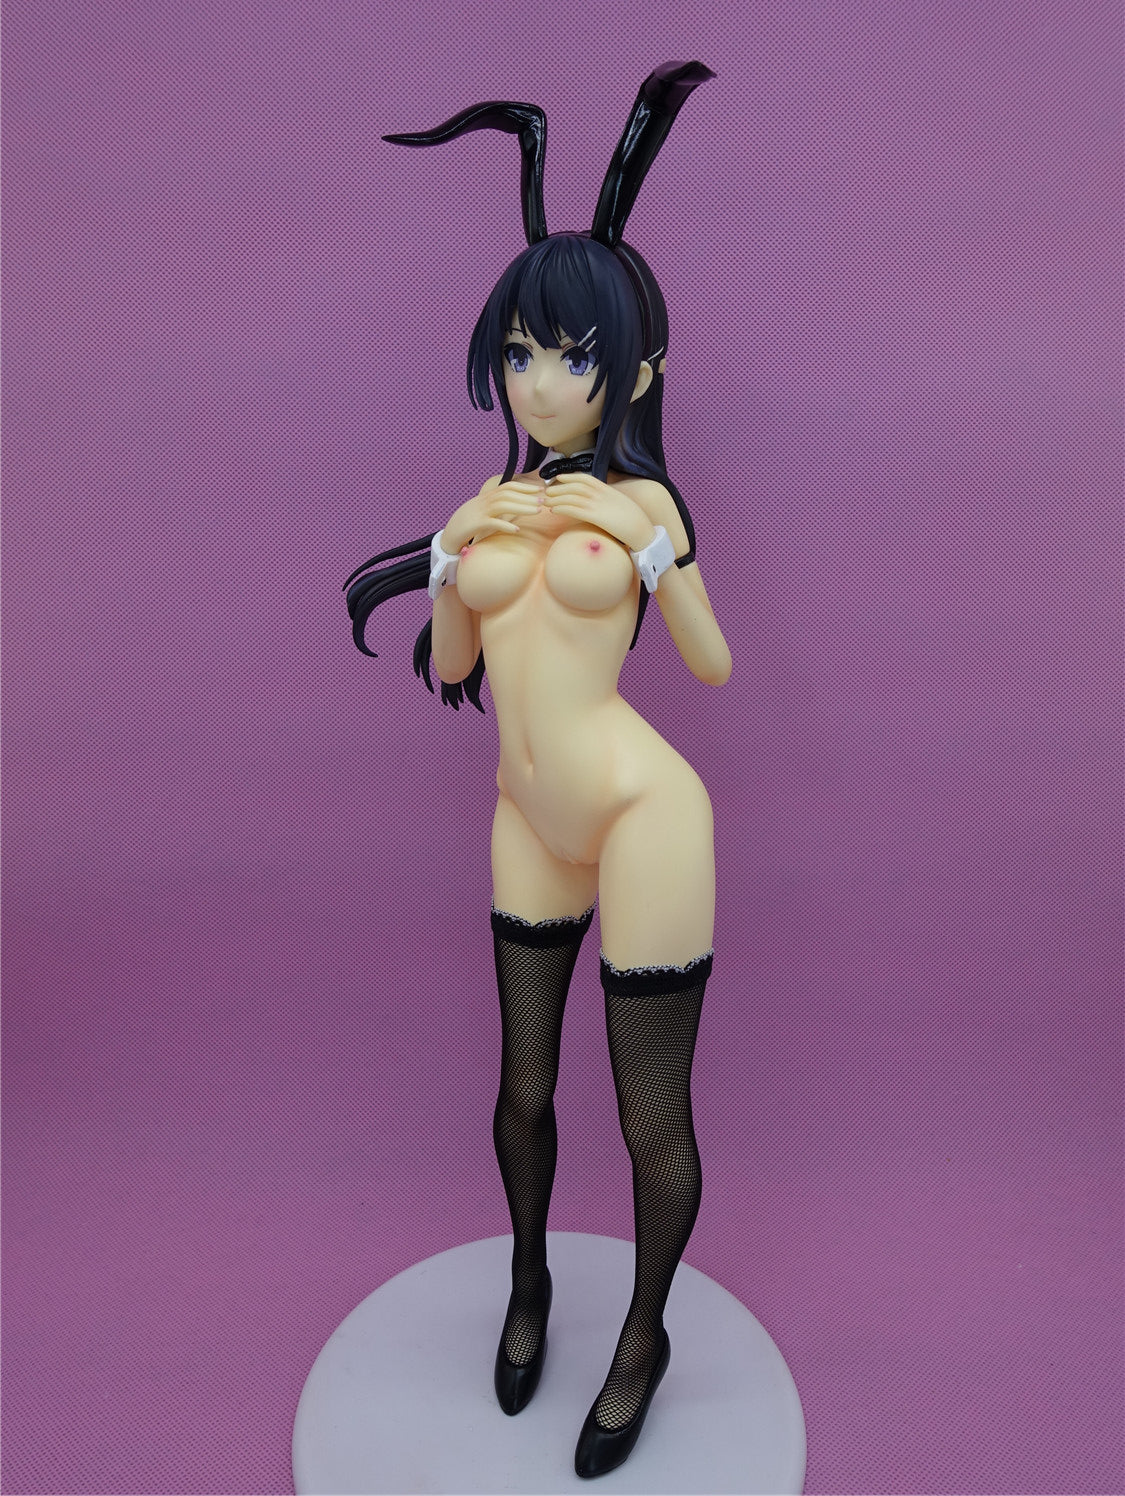 Rascal Does Not Dream of Bunny Girl Senpai Mai Sakurajima 1/6 naked anime figure sexy anime girl figure